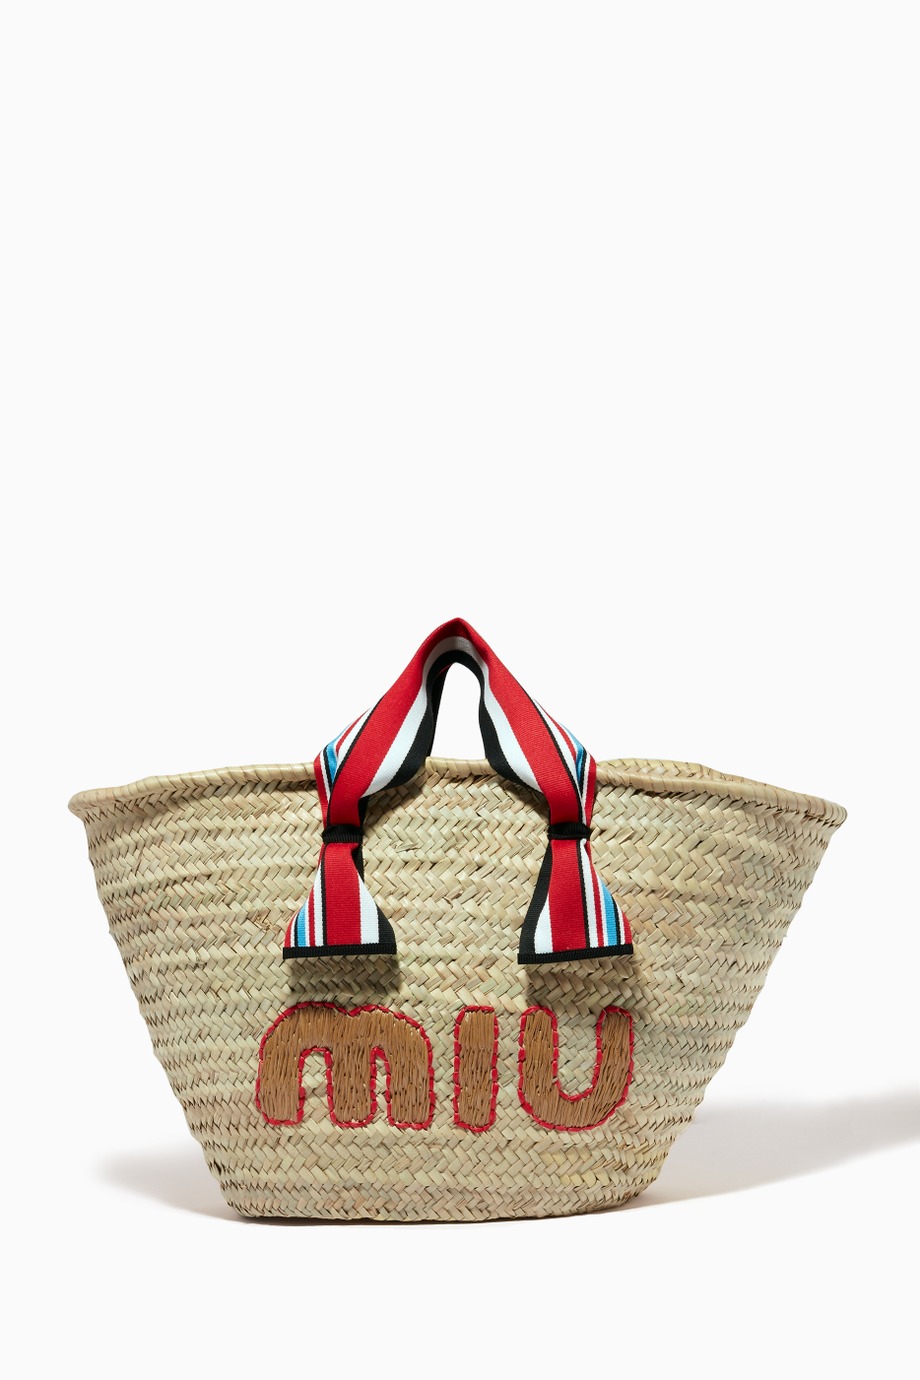 حقائب القش من ميو ميو Miu Miu لصيف 2019